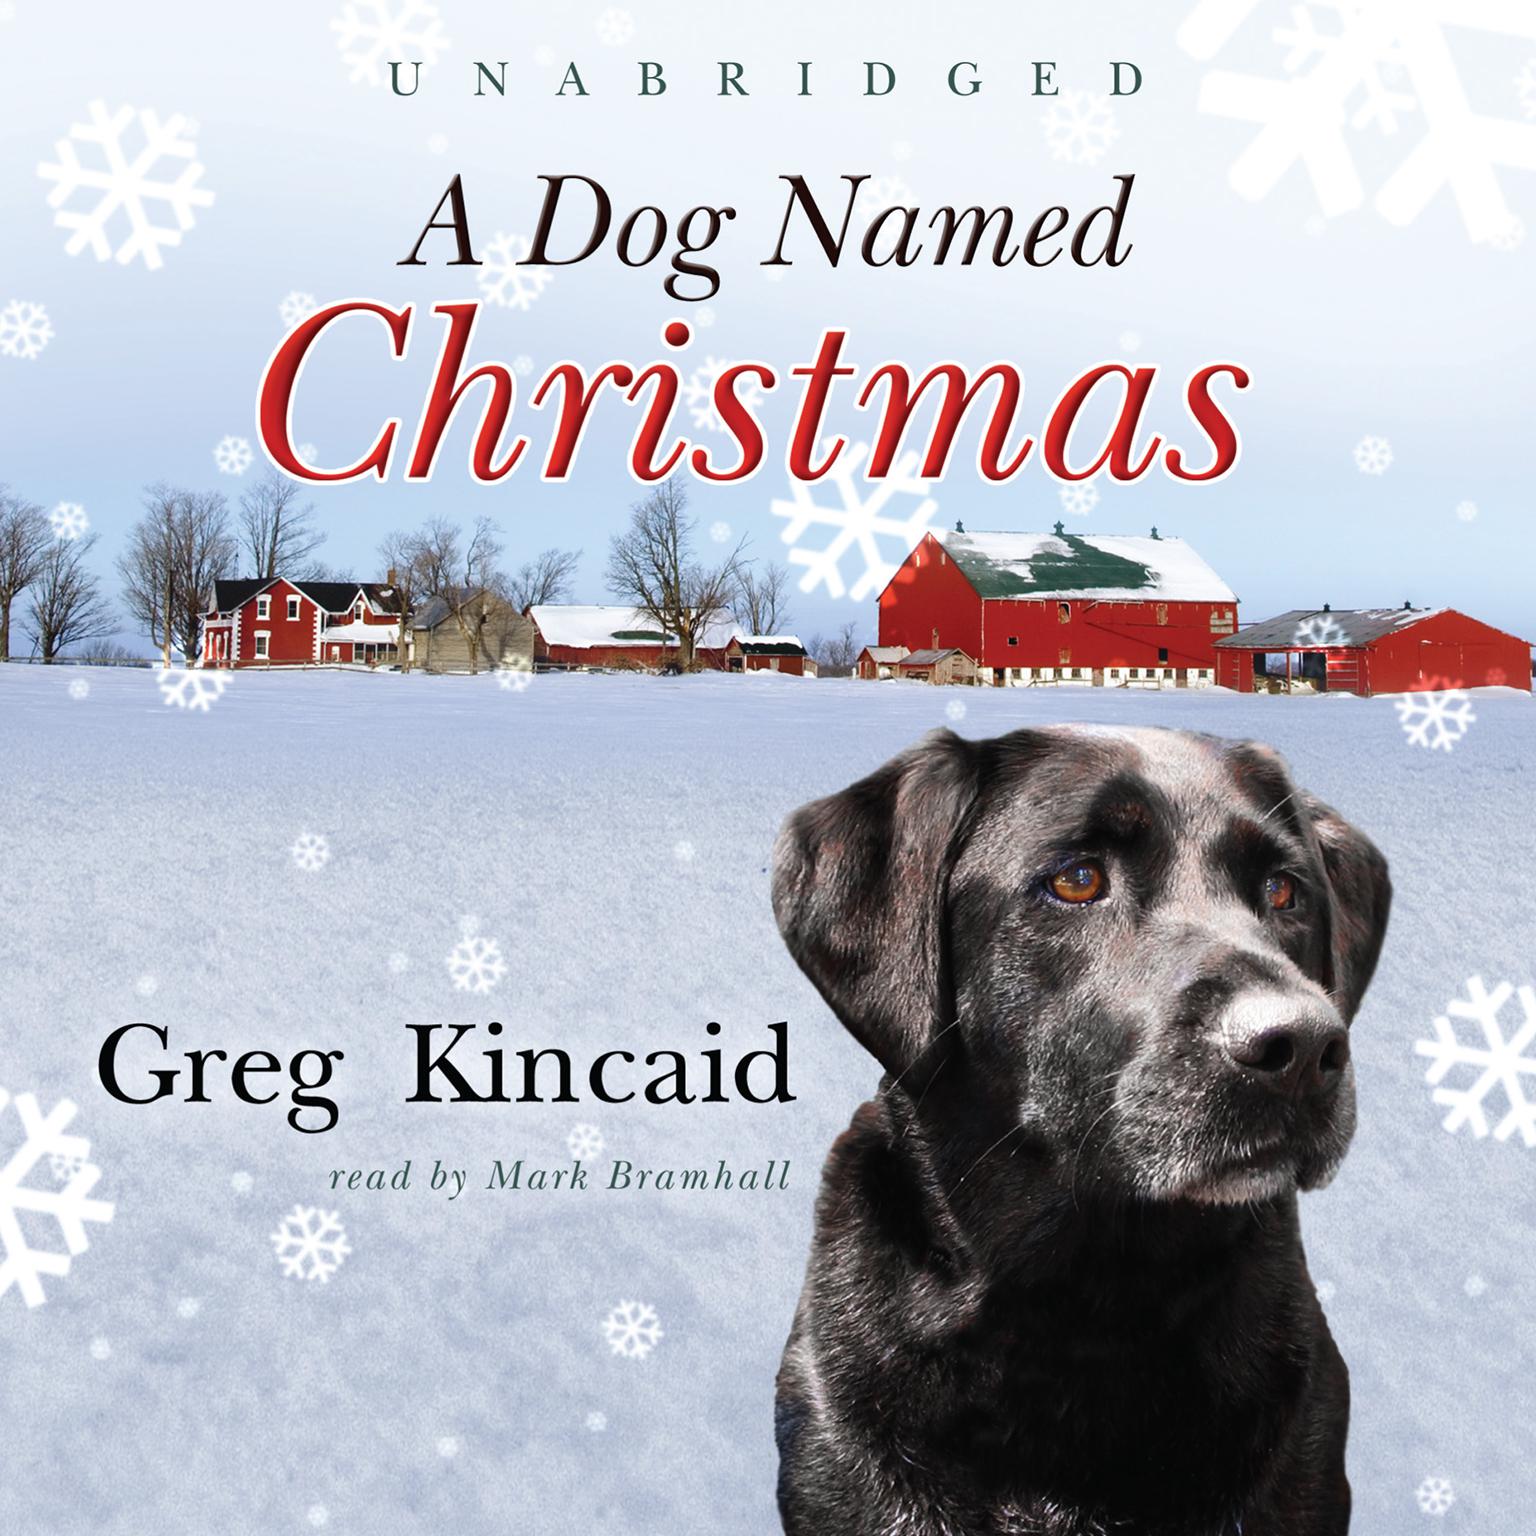 A Dog Named Christmas Audiobook, by Greg Kincaid